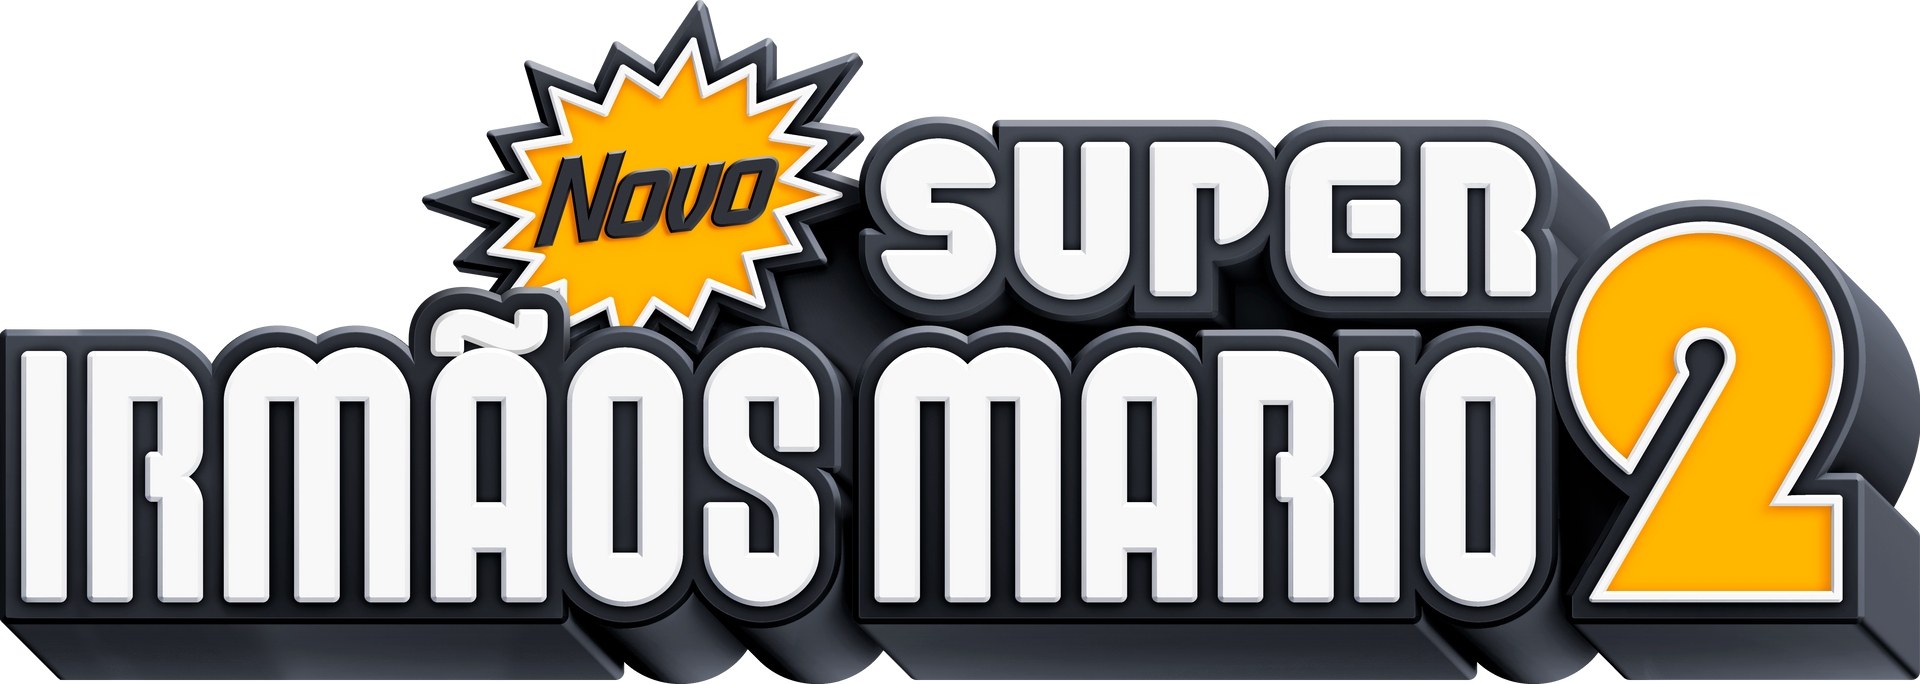 NEW Super Mario Bros. 2 PT-BR Logo by BMatSantos on DeviantArt